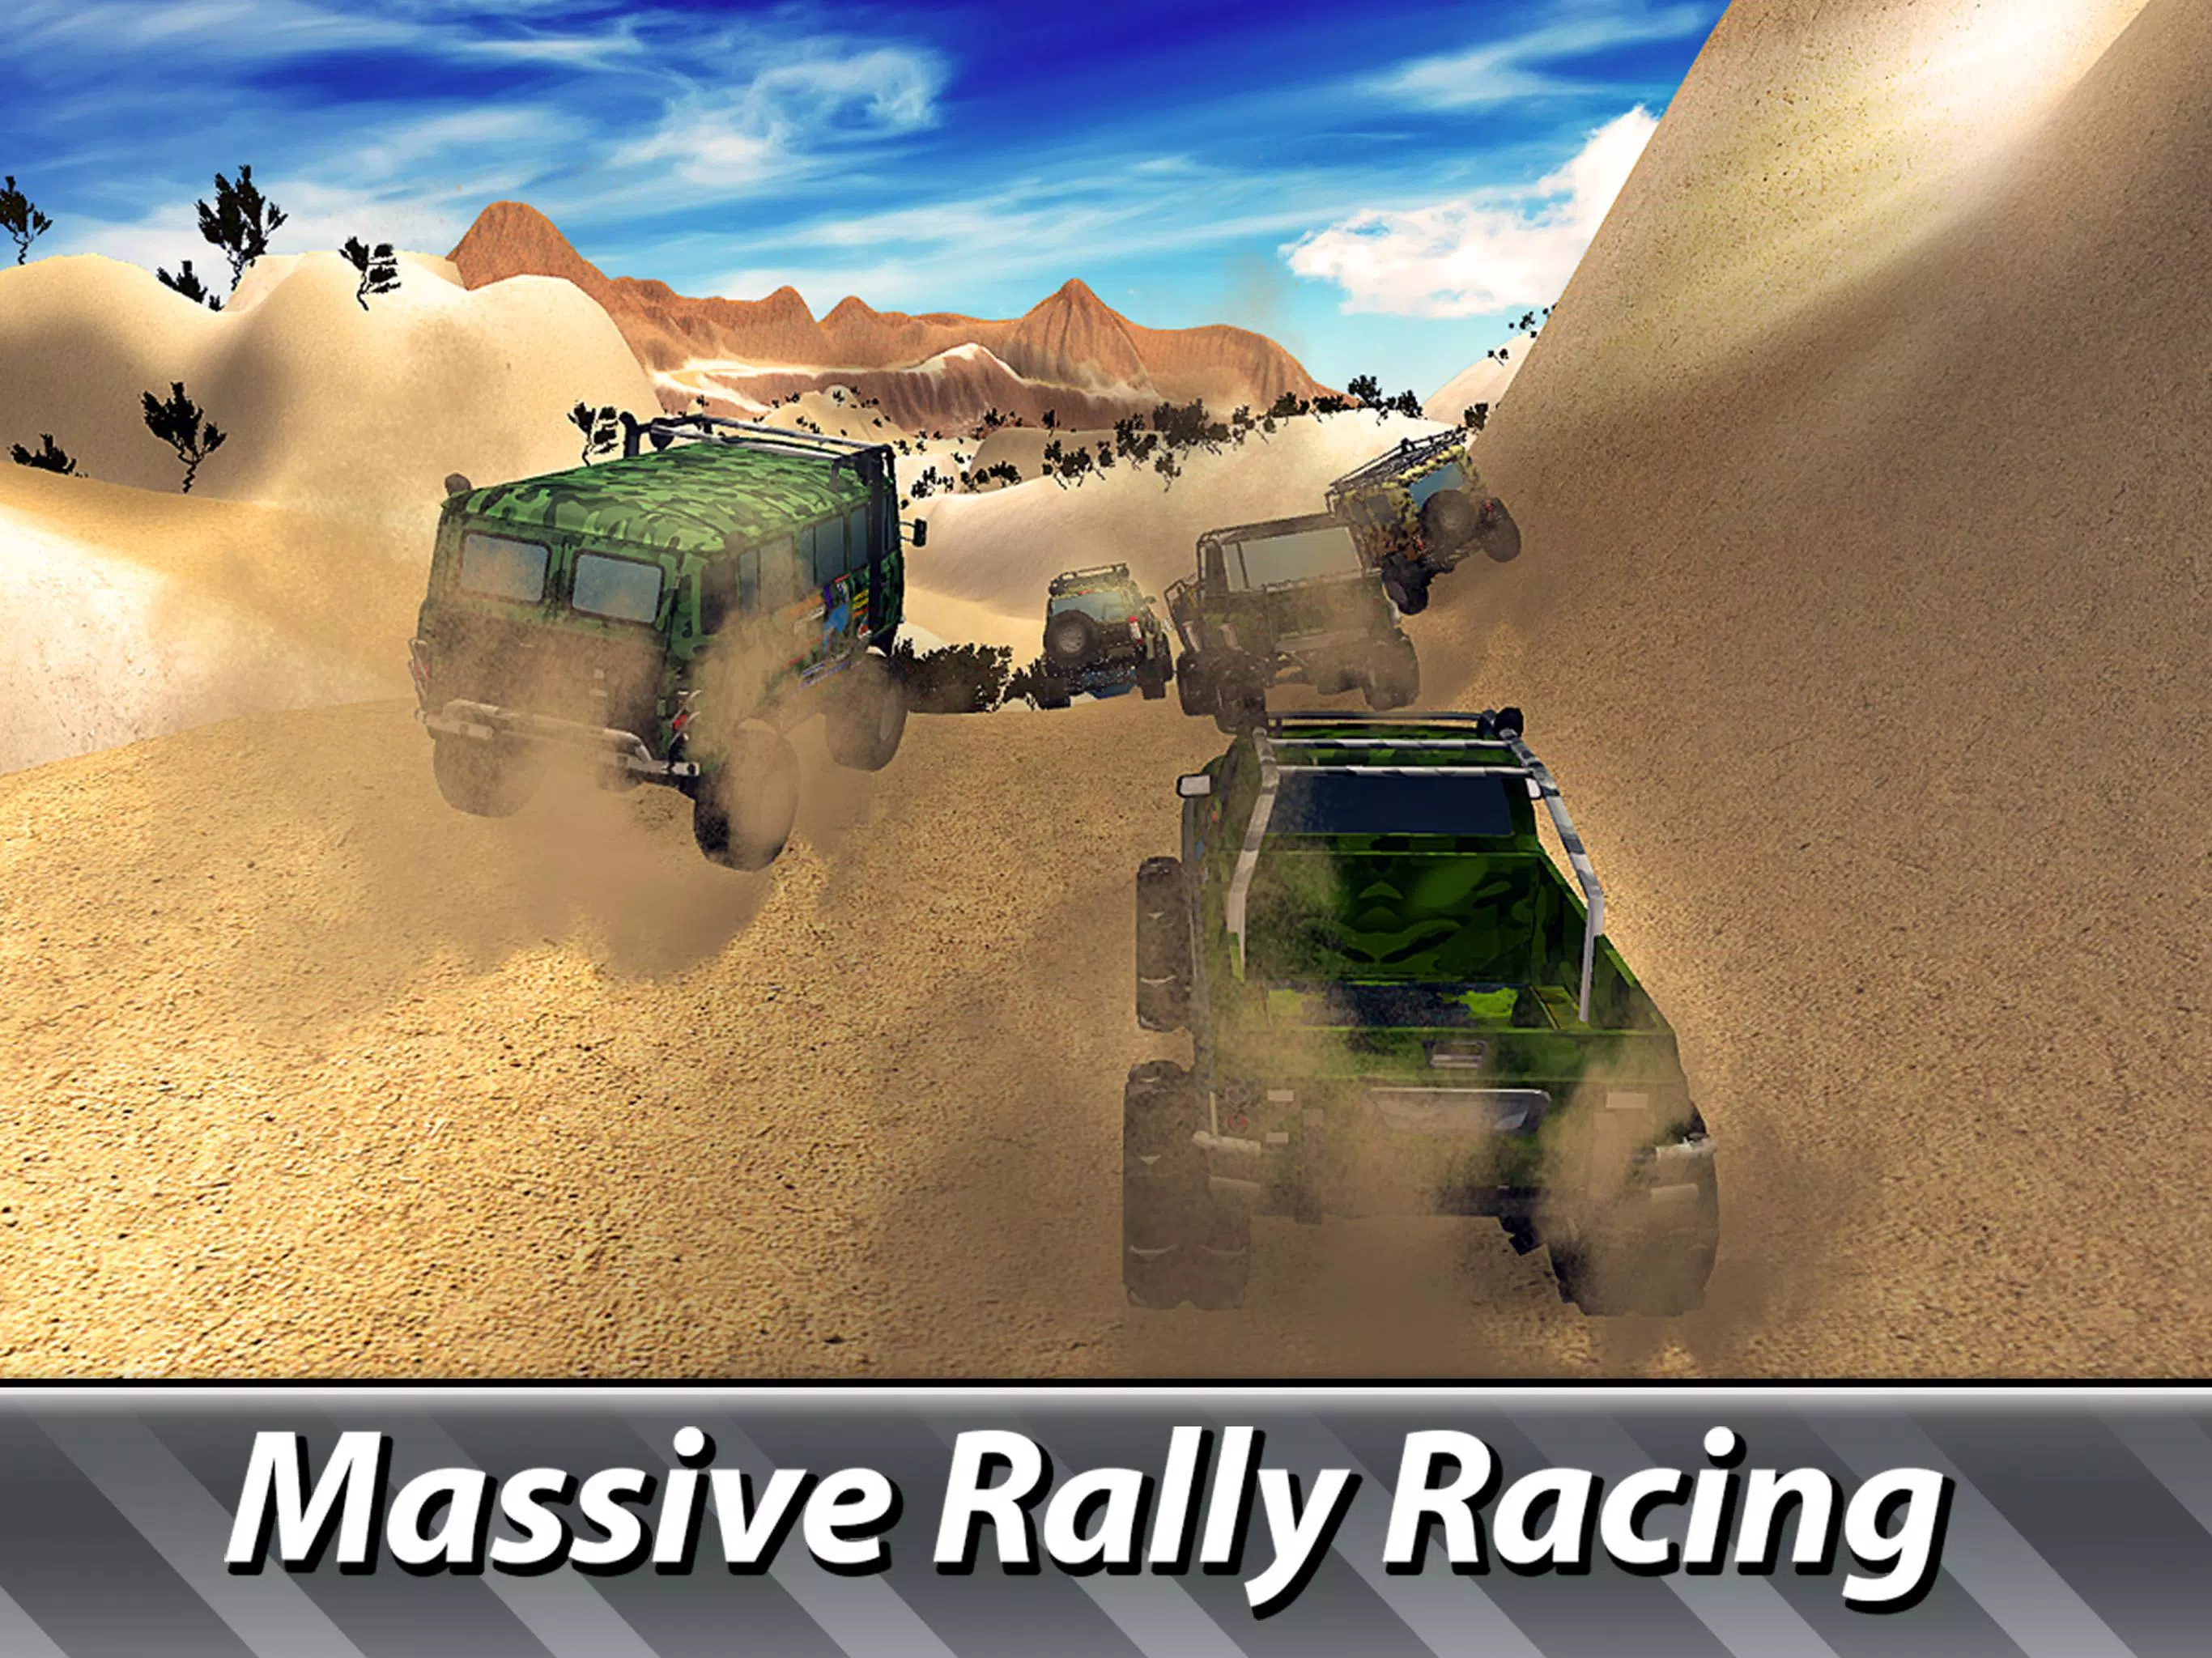 Uaz Racing 4x4 gameplay MauNordico 